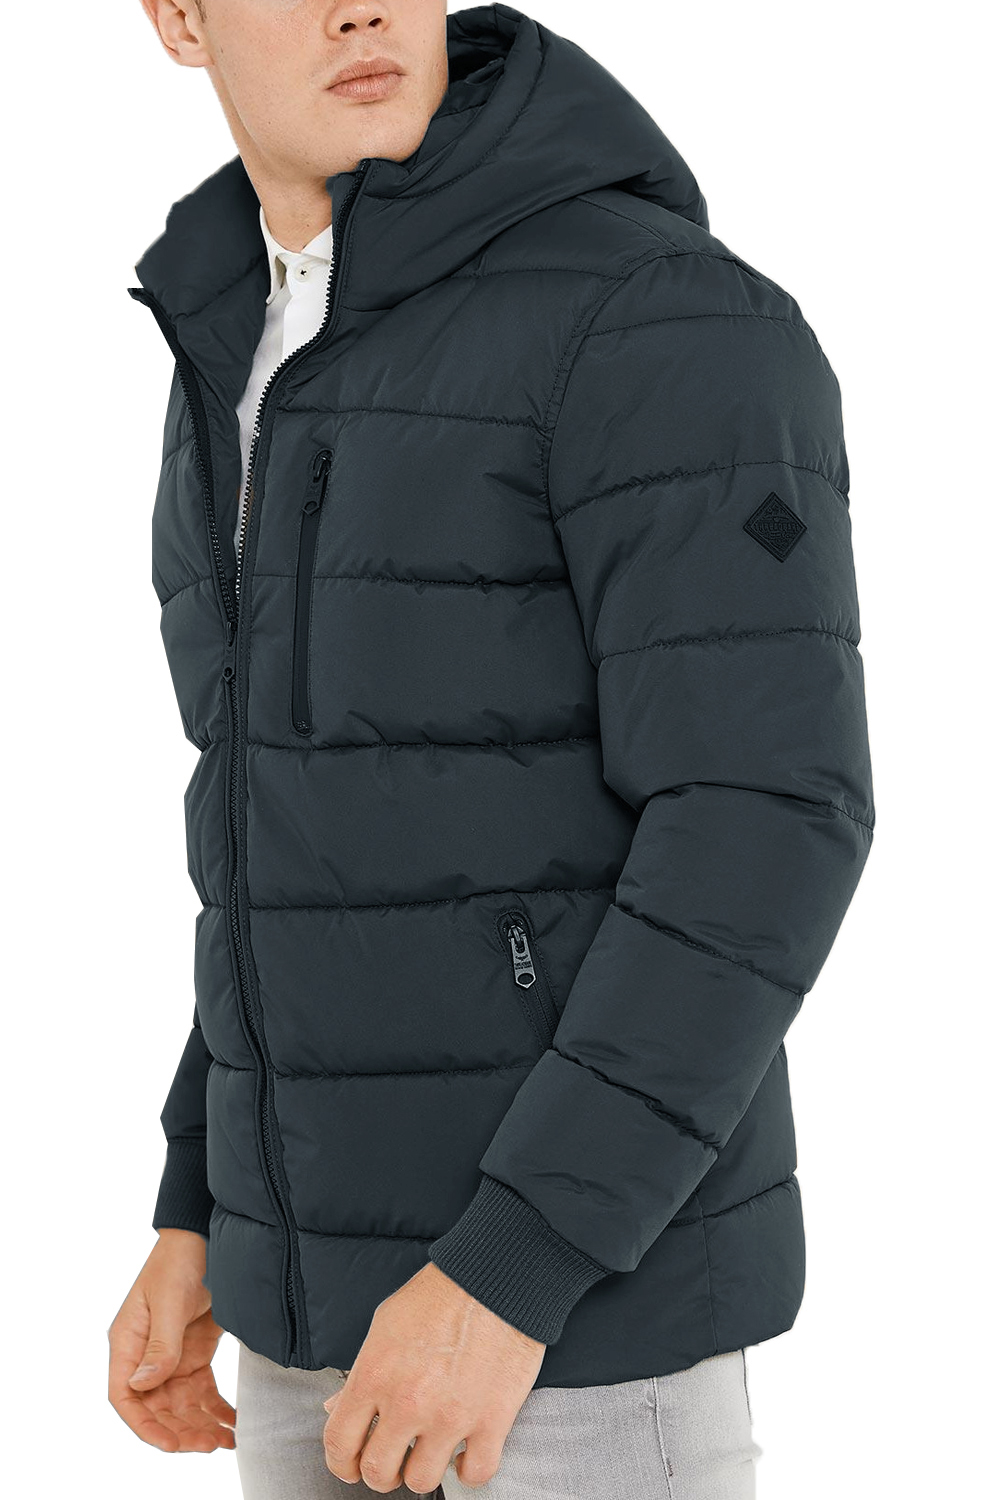 Threadbare Mens Matrix Puffer Jacket New Designer Warm Padded Hooded Zip Up Coat | eBay